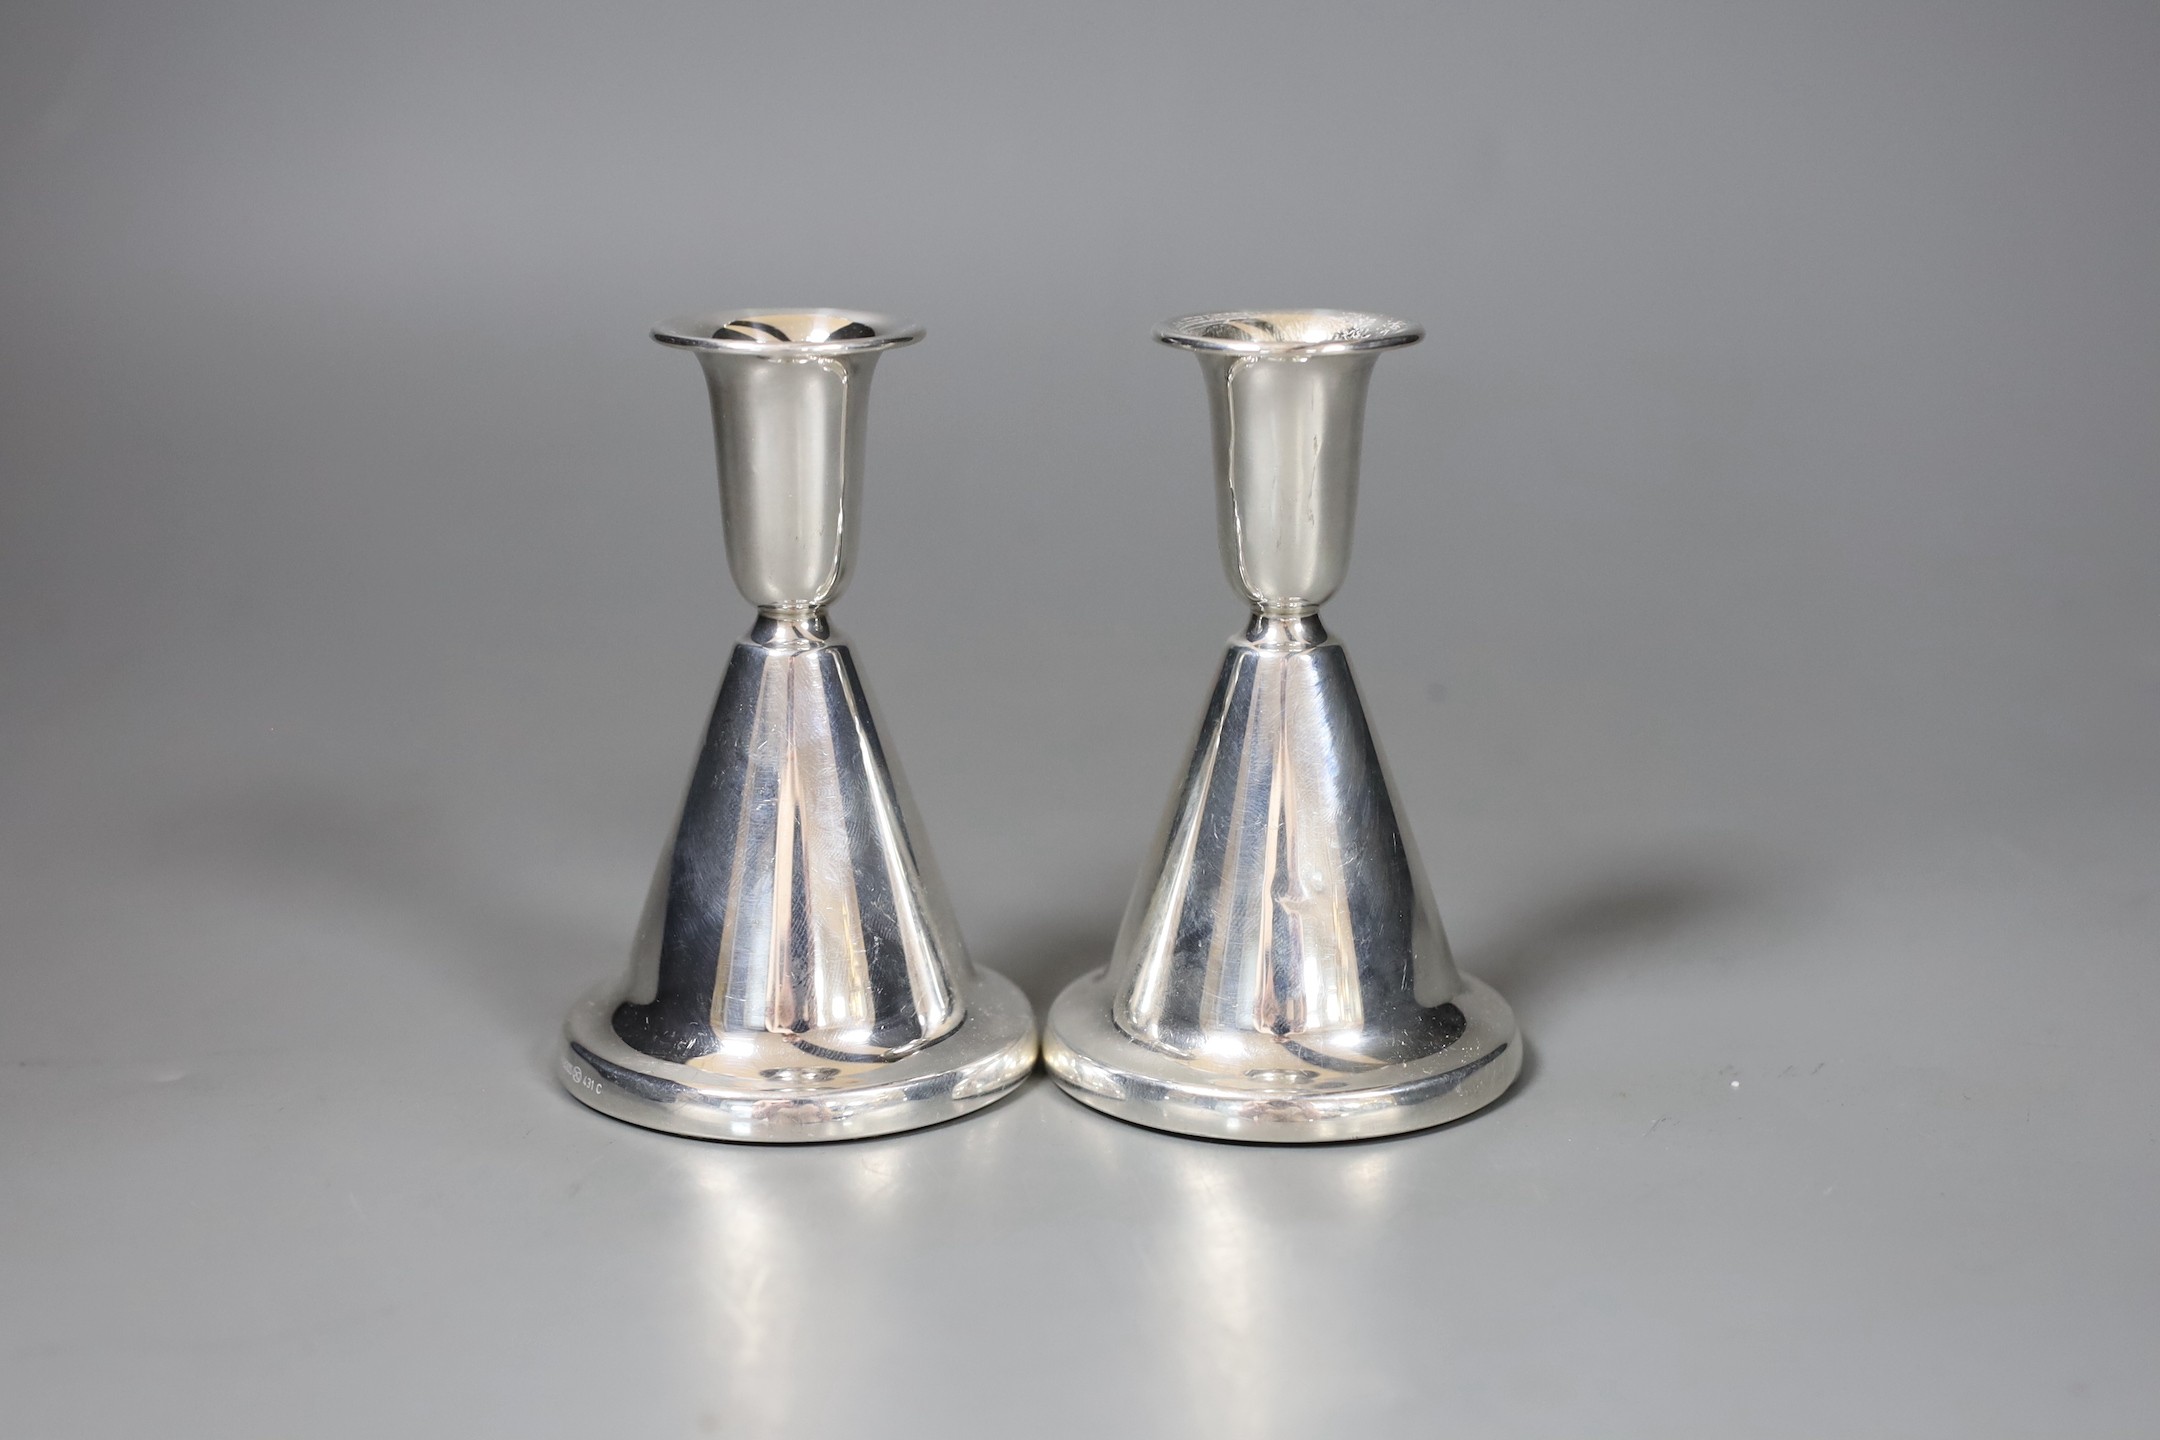 Two pairs of 20th century Scandinavian 830 standard white metal dwarf candlesticks, tallest 10.7cm.